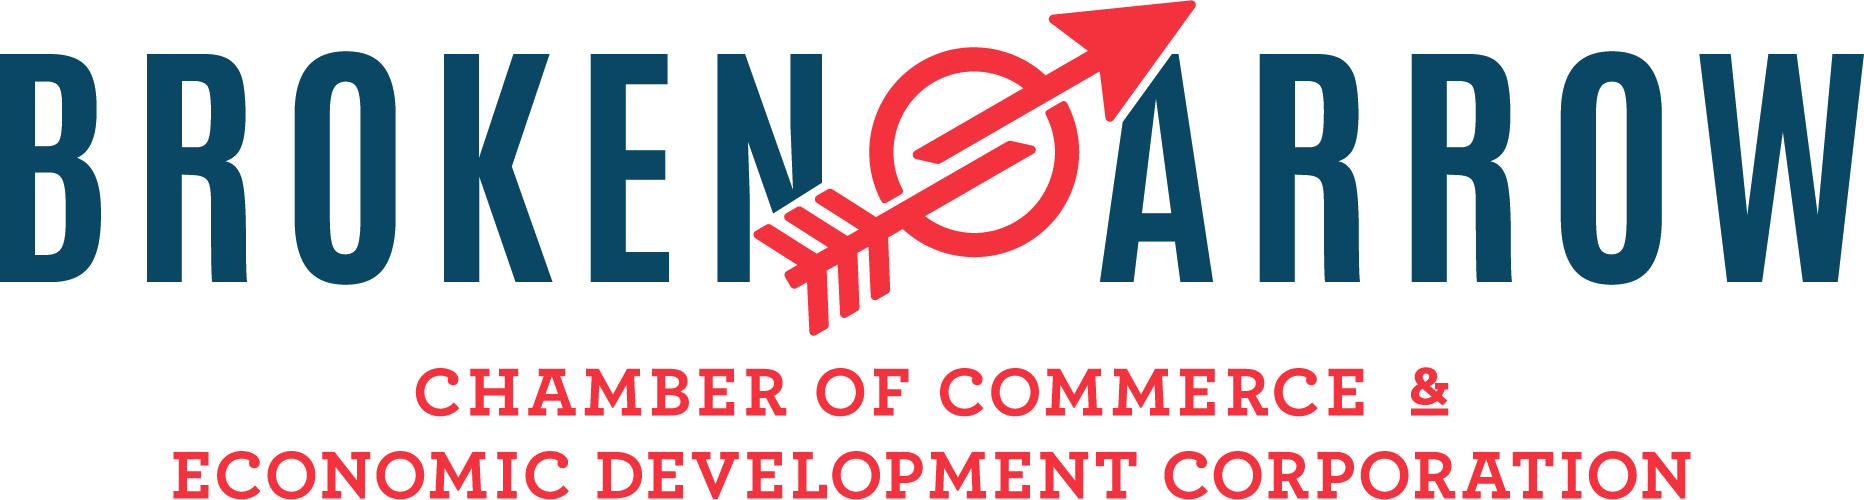 Broken Arrow Chamber Of Commerce and Economic Development Corporation's Logo